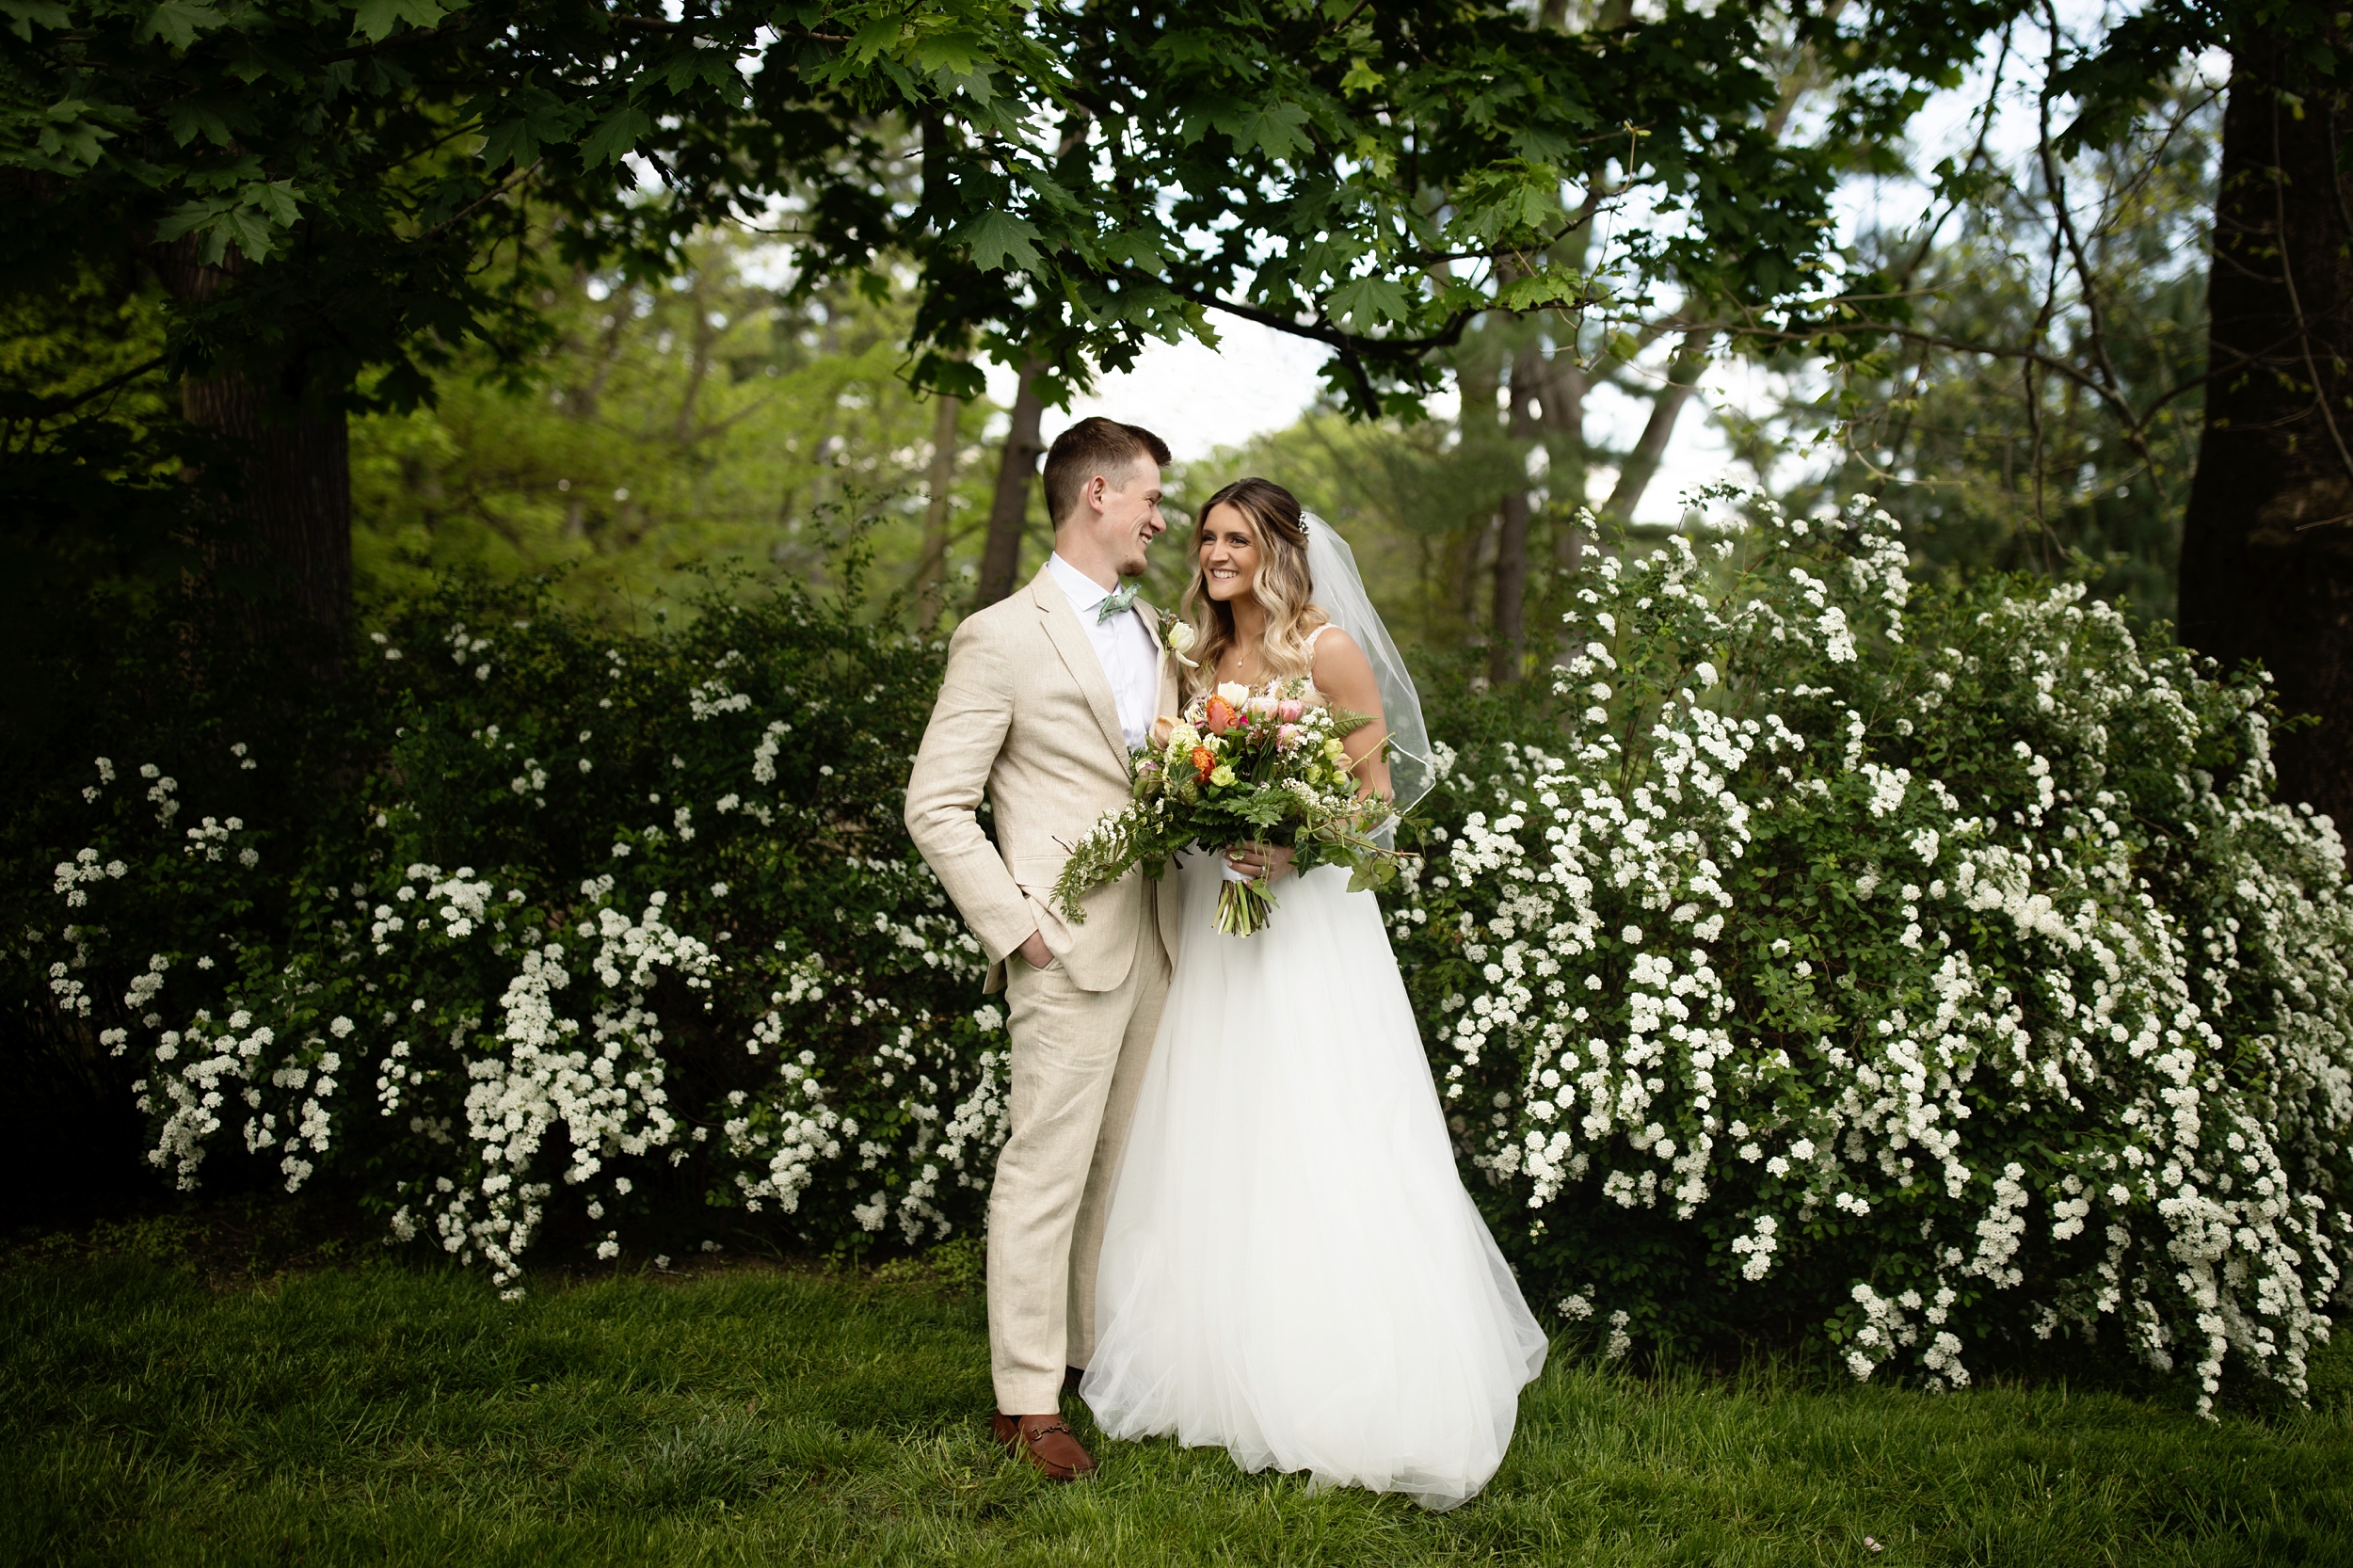 Conestoga House and Gardens Wedding, Lancaster PA Wedding, captured by Lancaster Wedding Photographers Janae Rose Photography